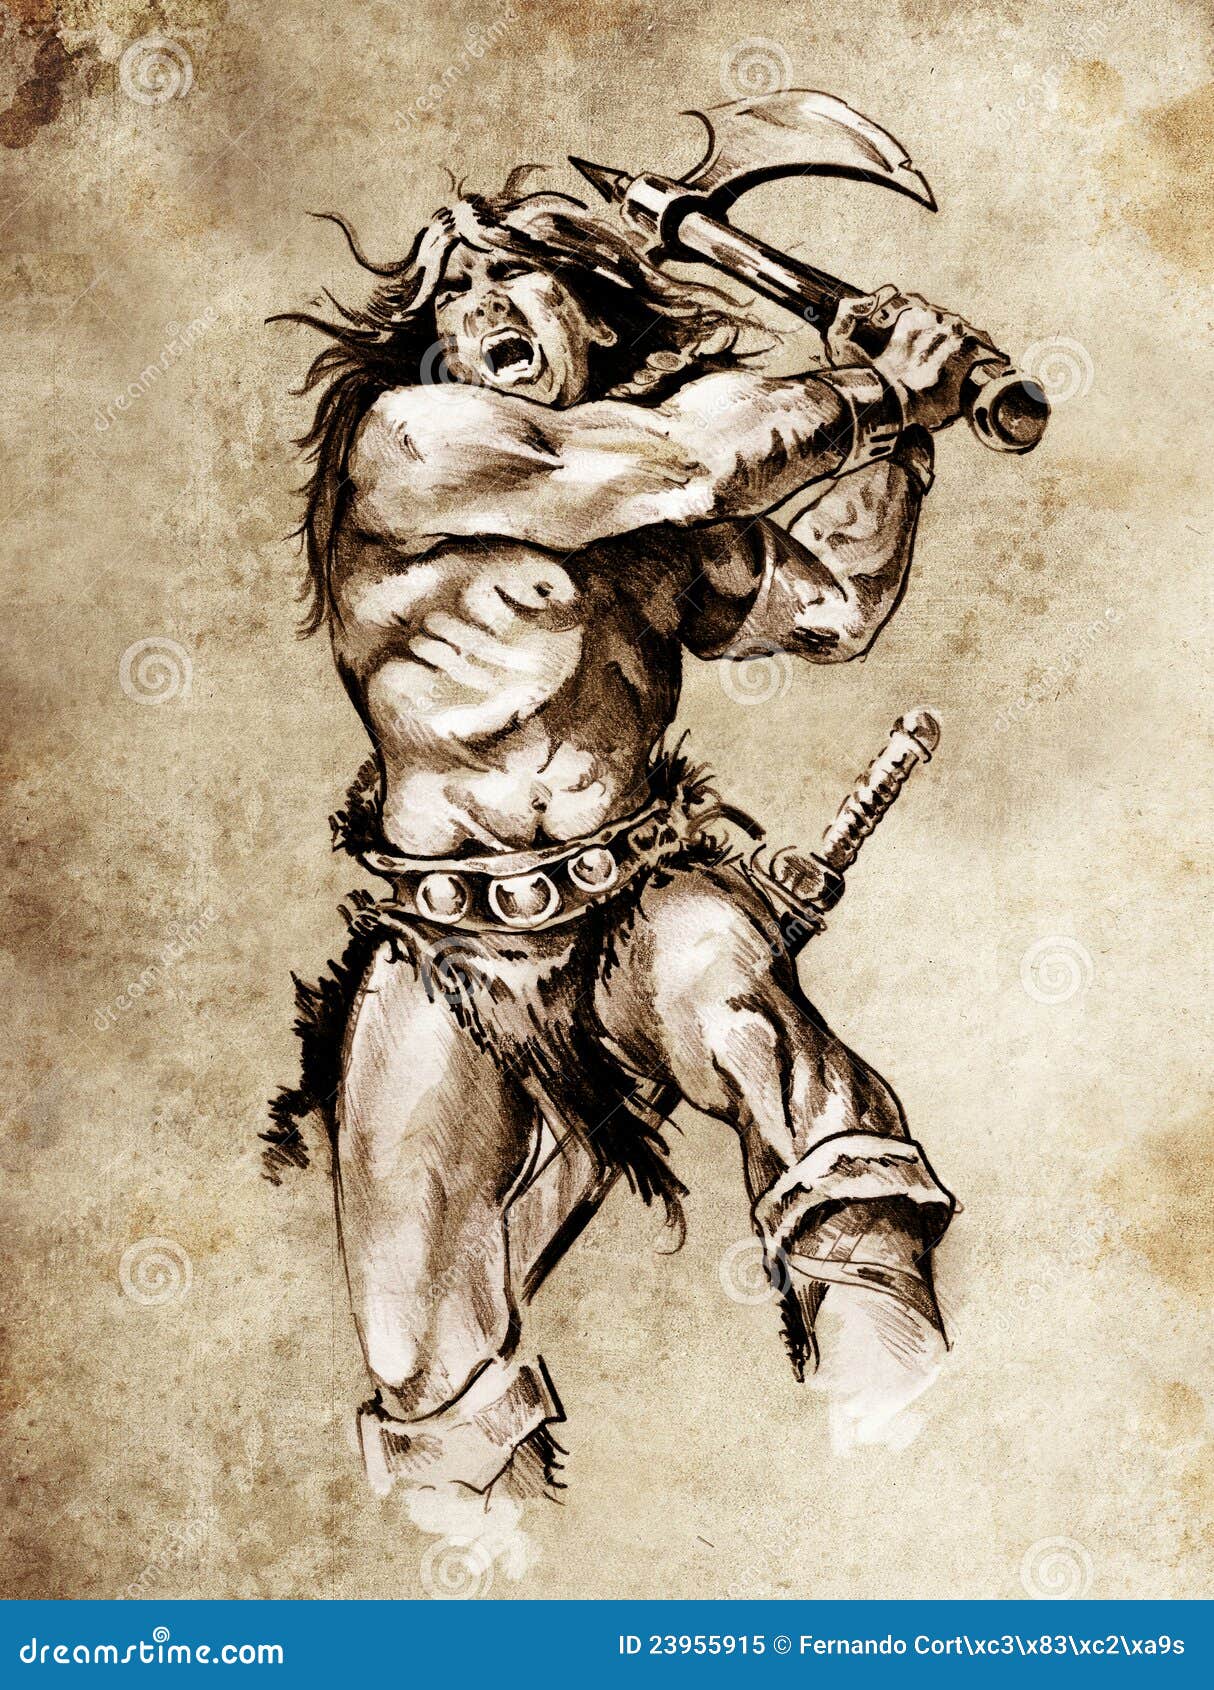 Indian Warrior on Behance